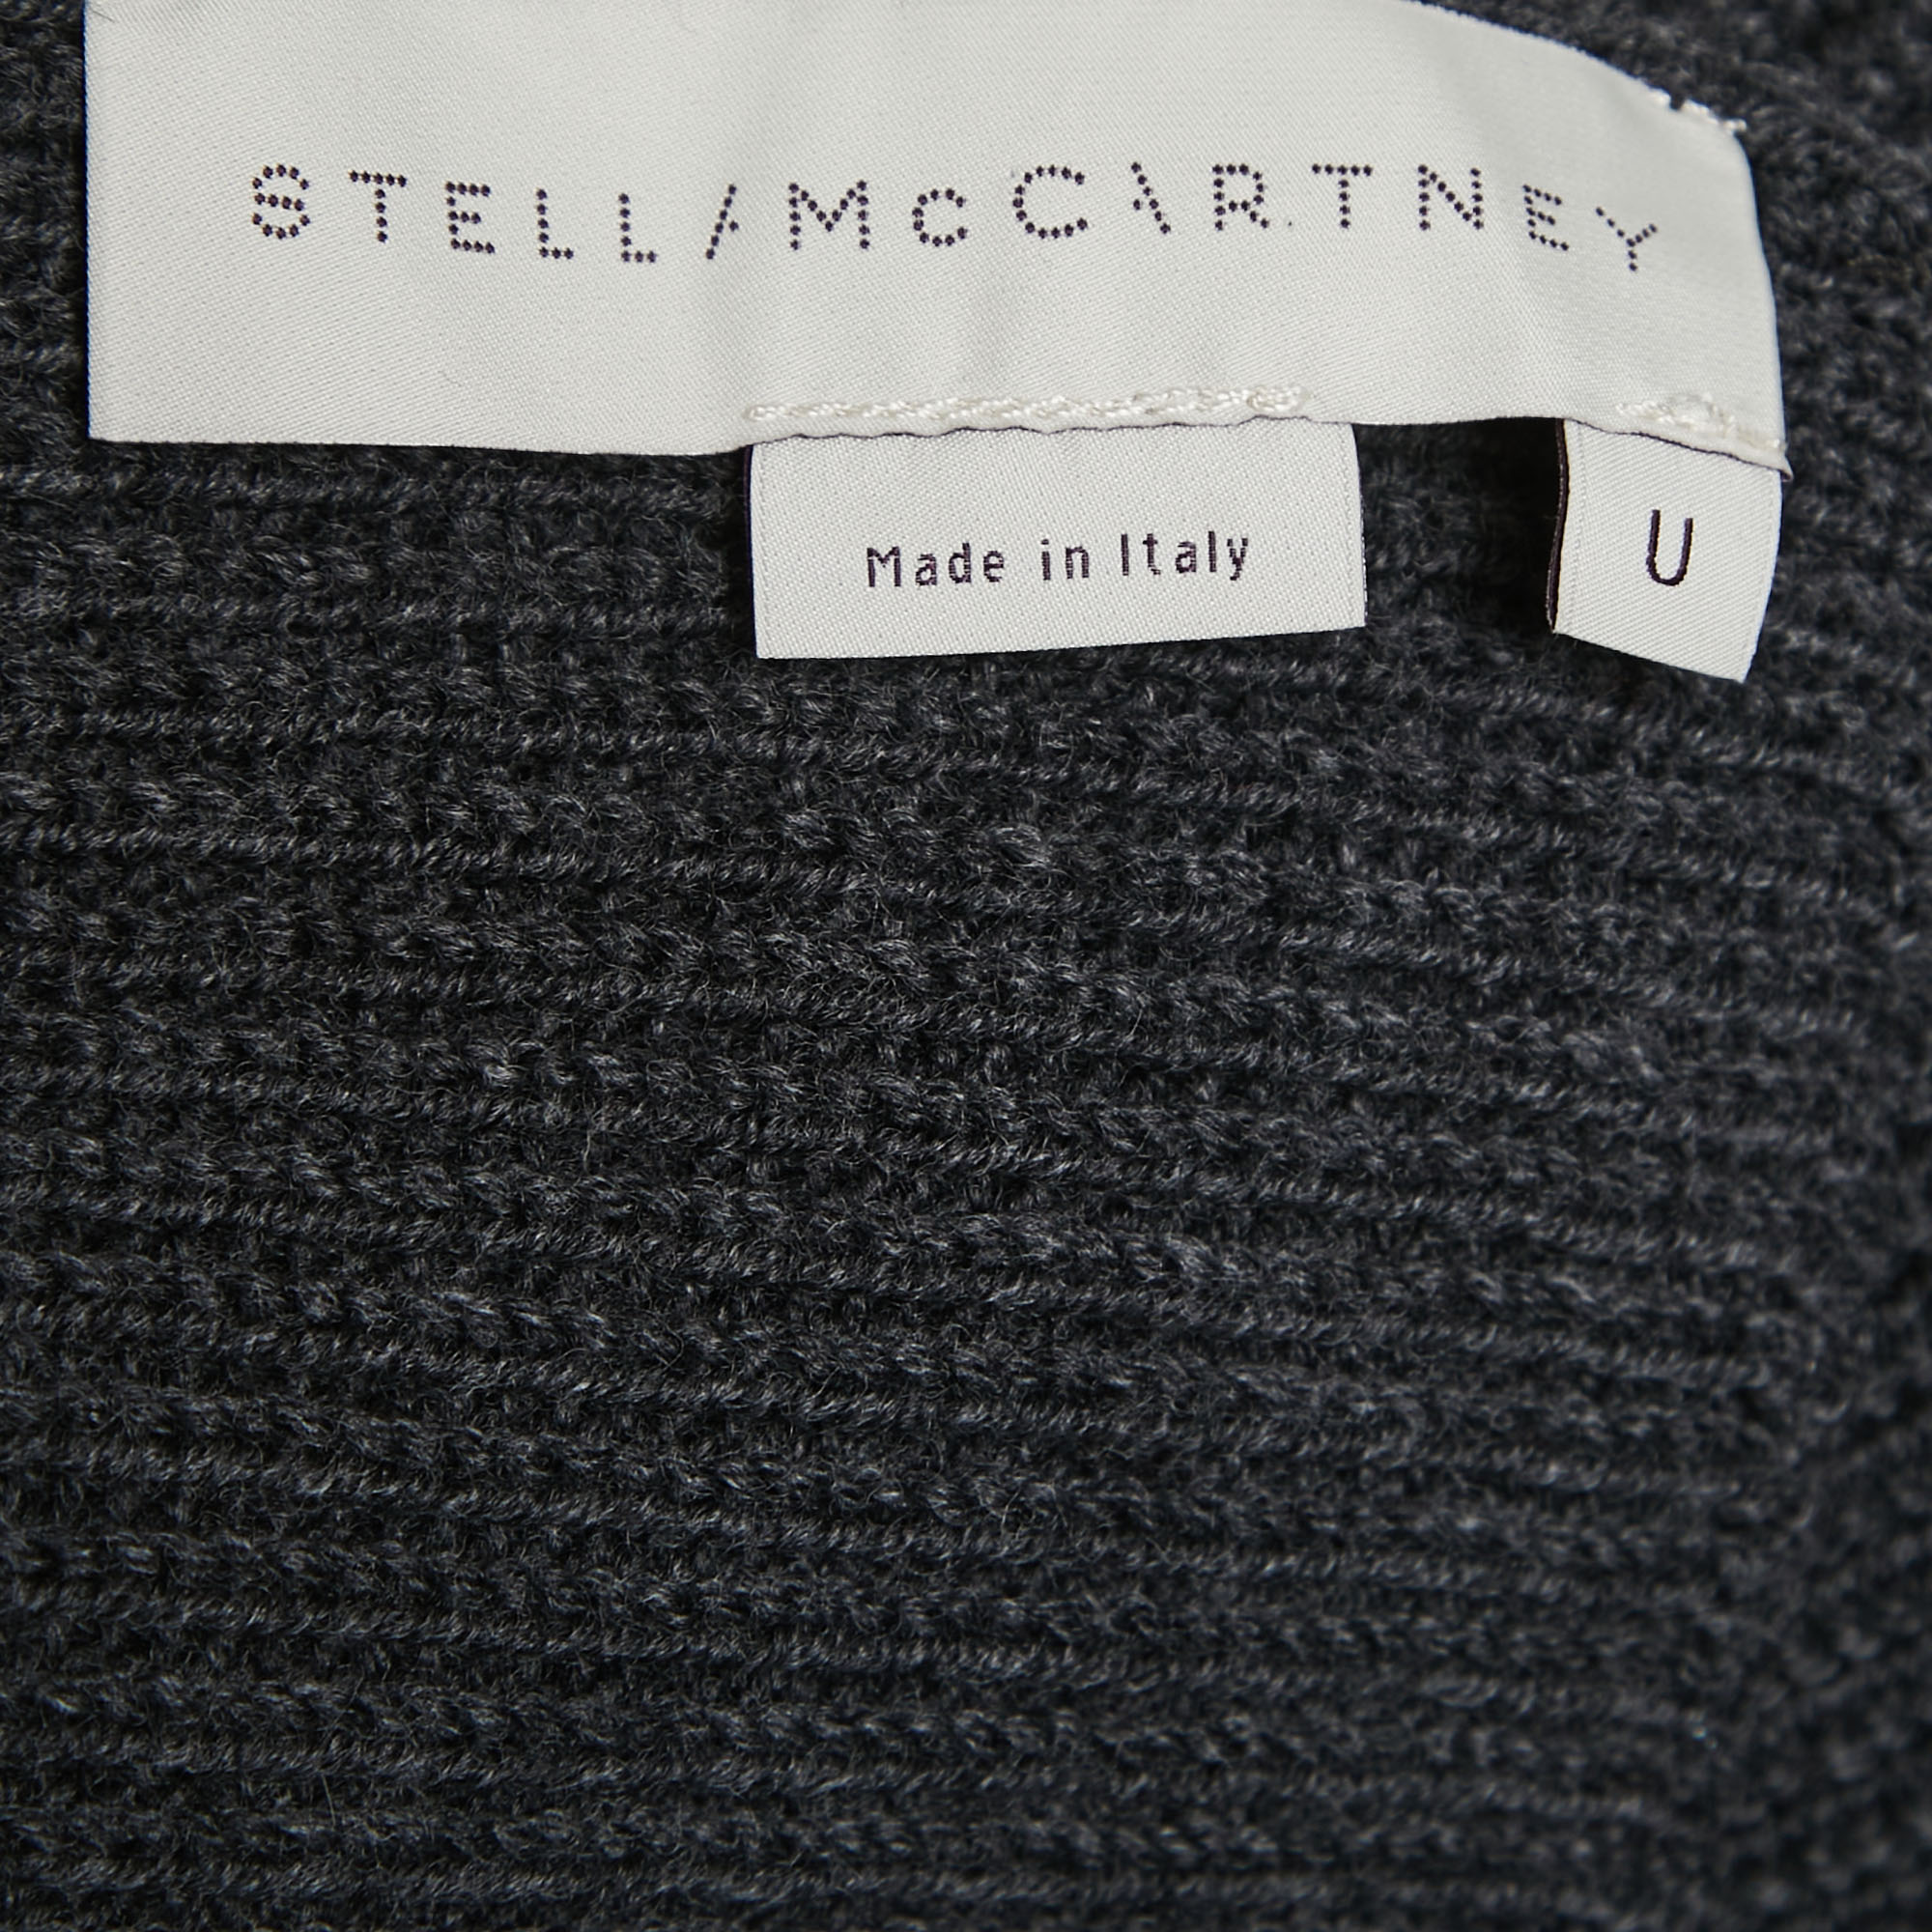 Stella McCartney Charcoal Grey Ribbed Wool Poncho (ONE SIZE)